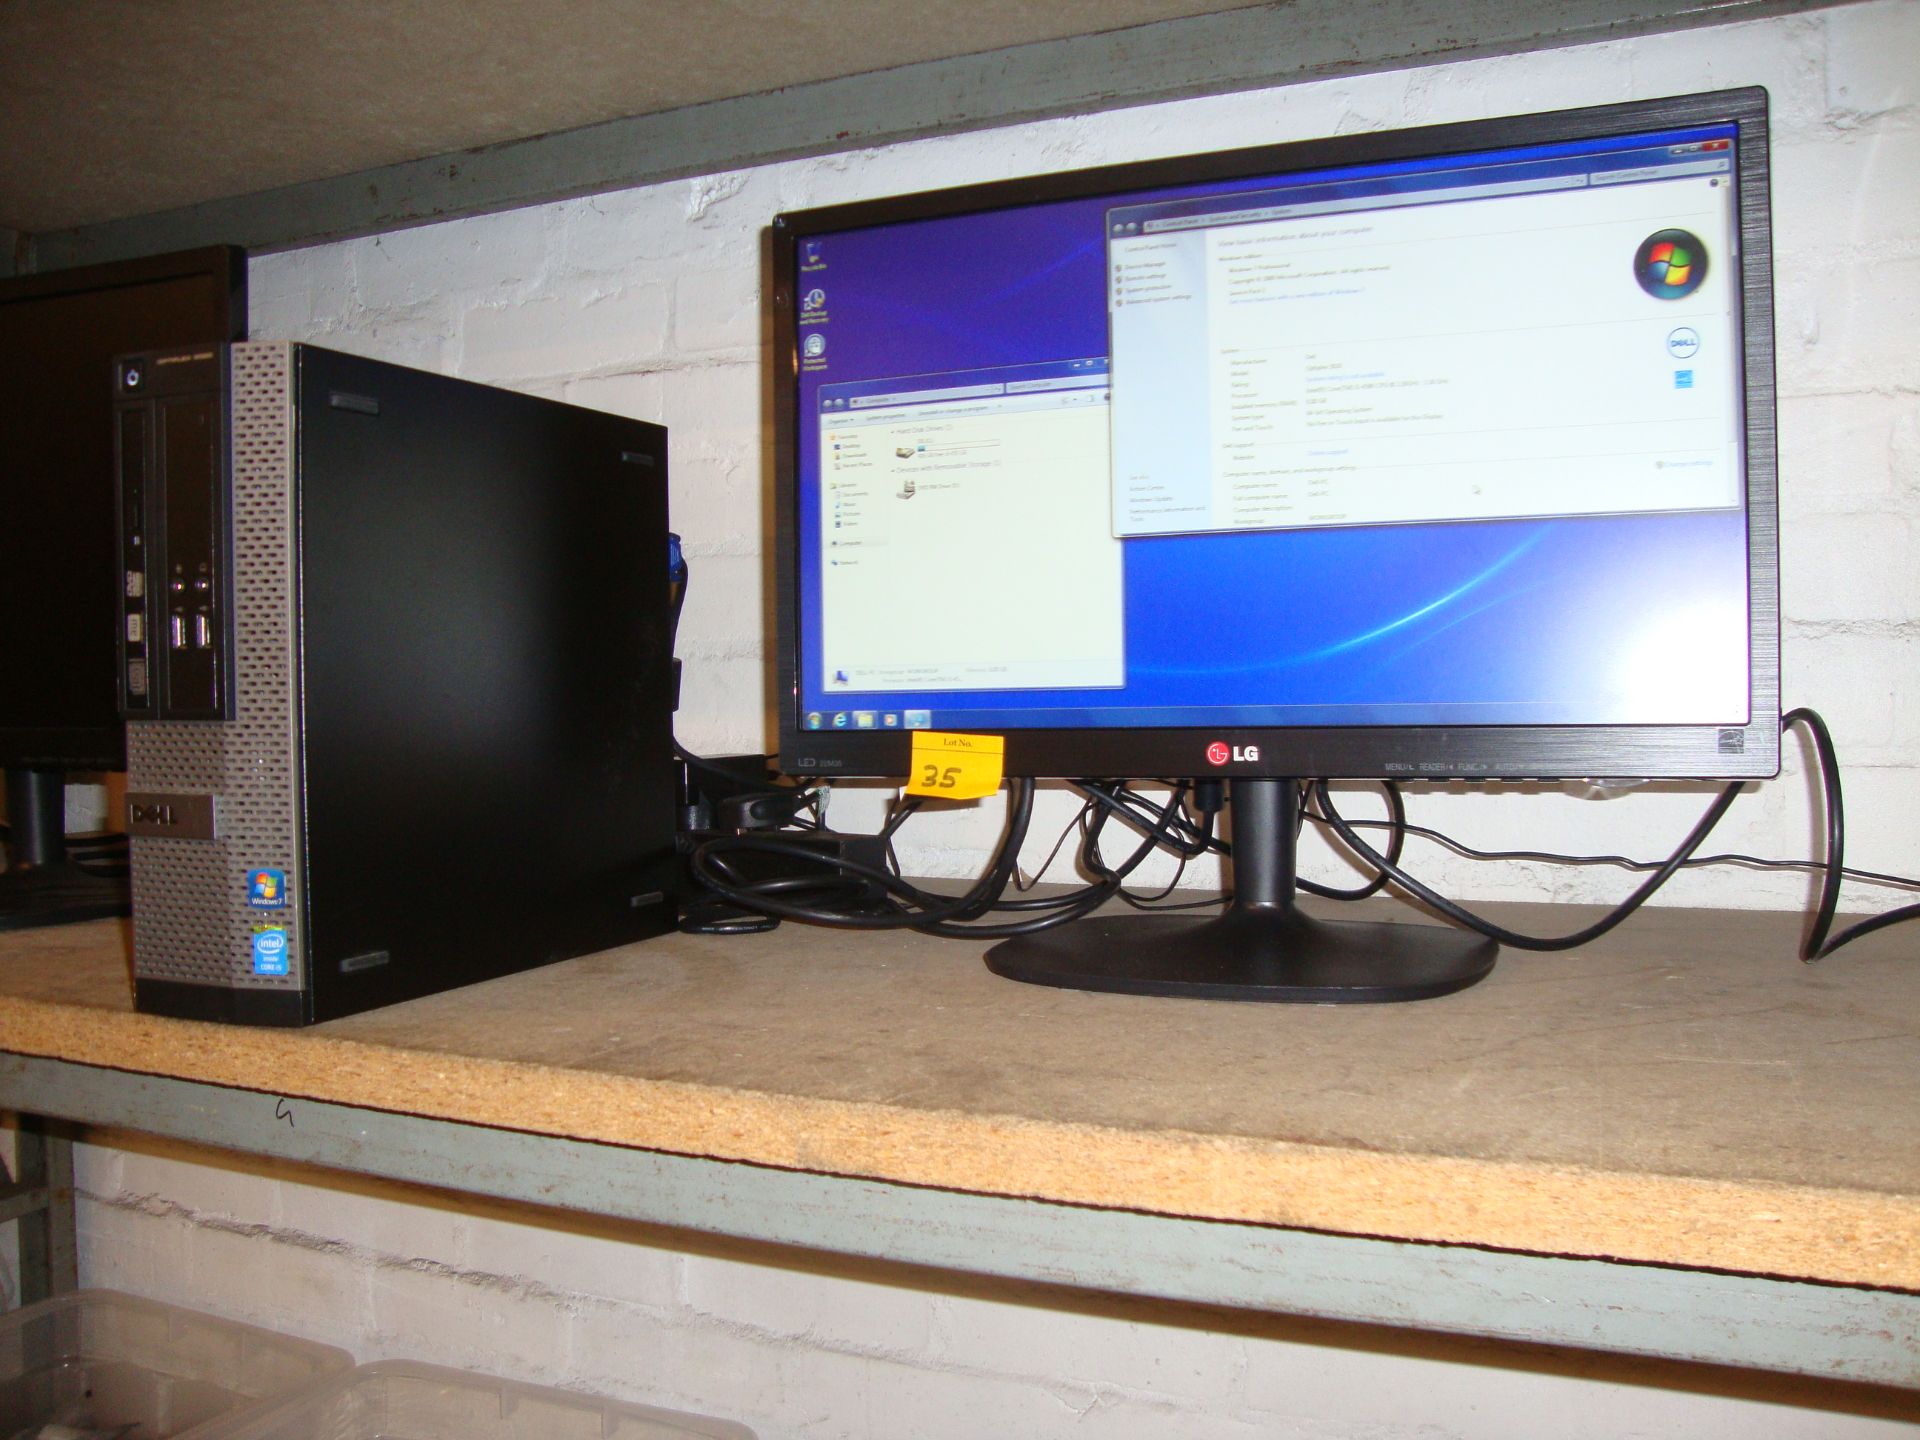 Dell Optiplex 3020 computer with Core i5-4590 processor, 8Gb RAM, 500Gb hard drive + LG 22" Monitor - Image 7 of 7